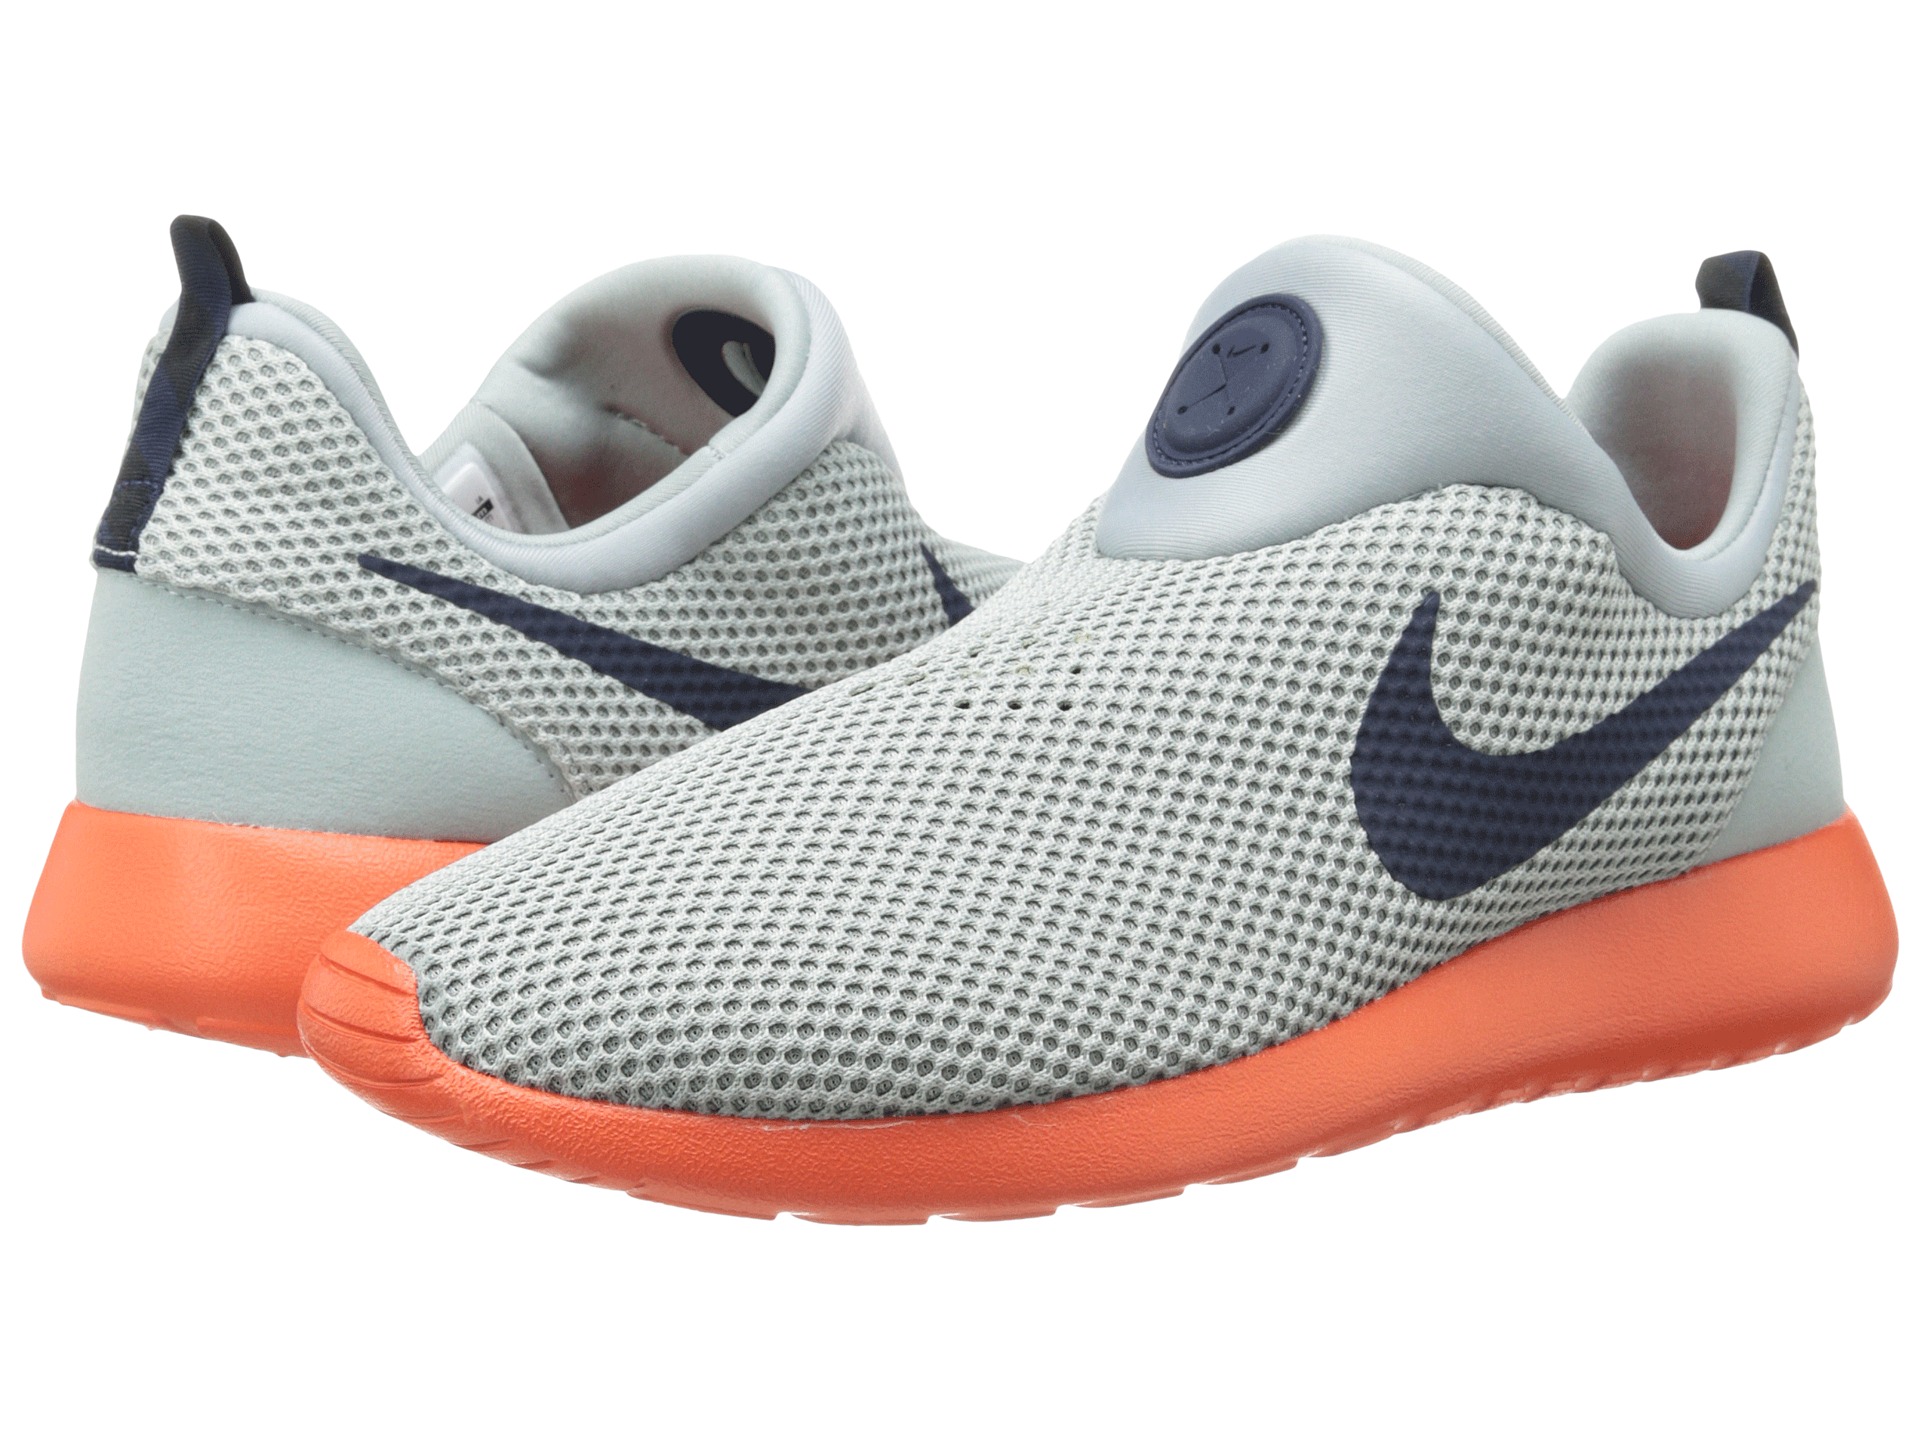 Nike Roshe Run Slip On | Shipped Free at Zappos